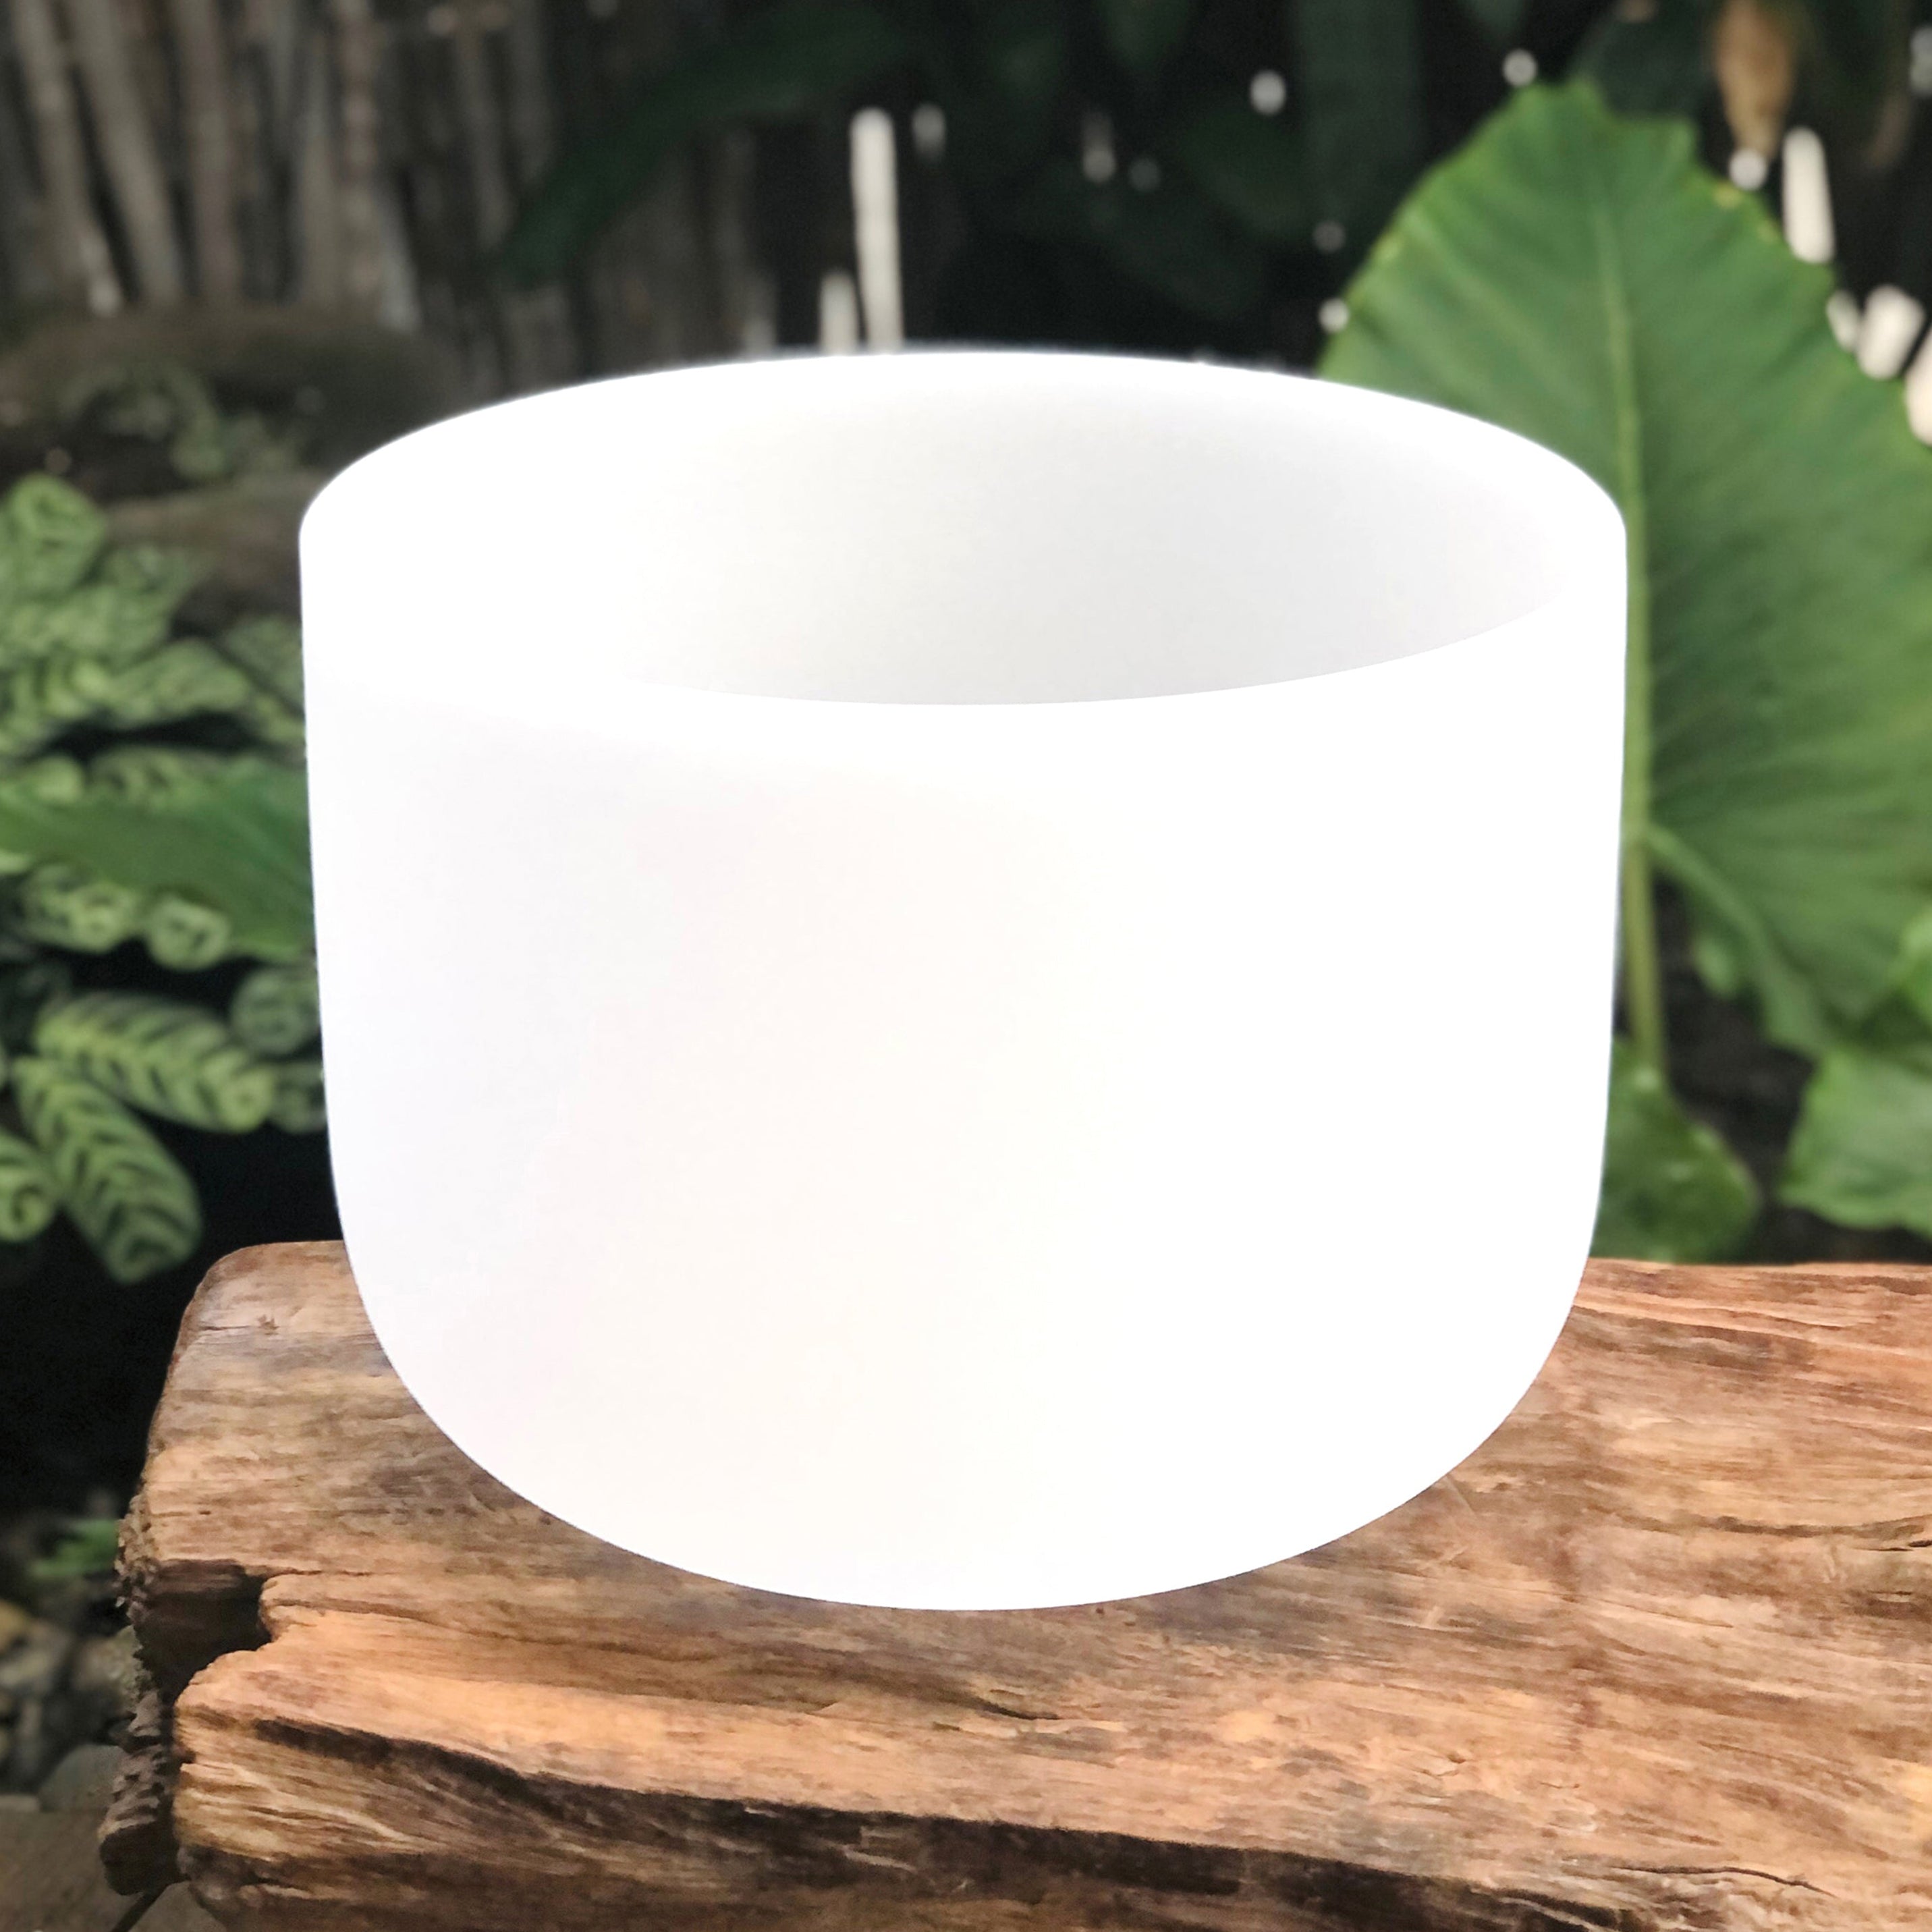 Sacral white crystal singing bowl australia